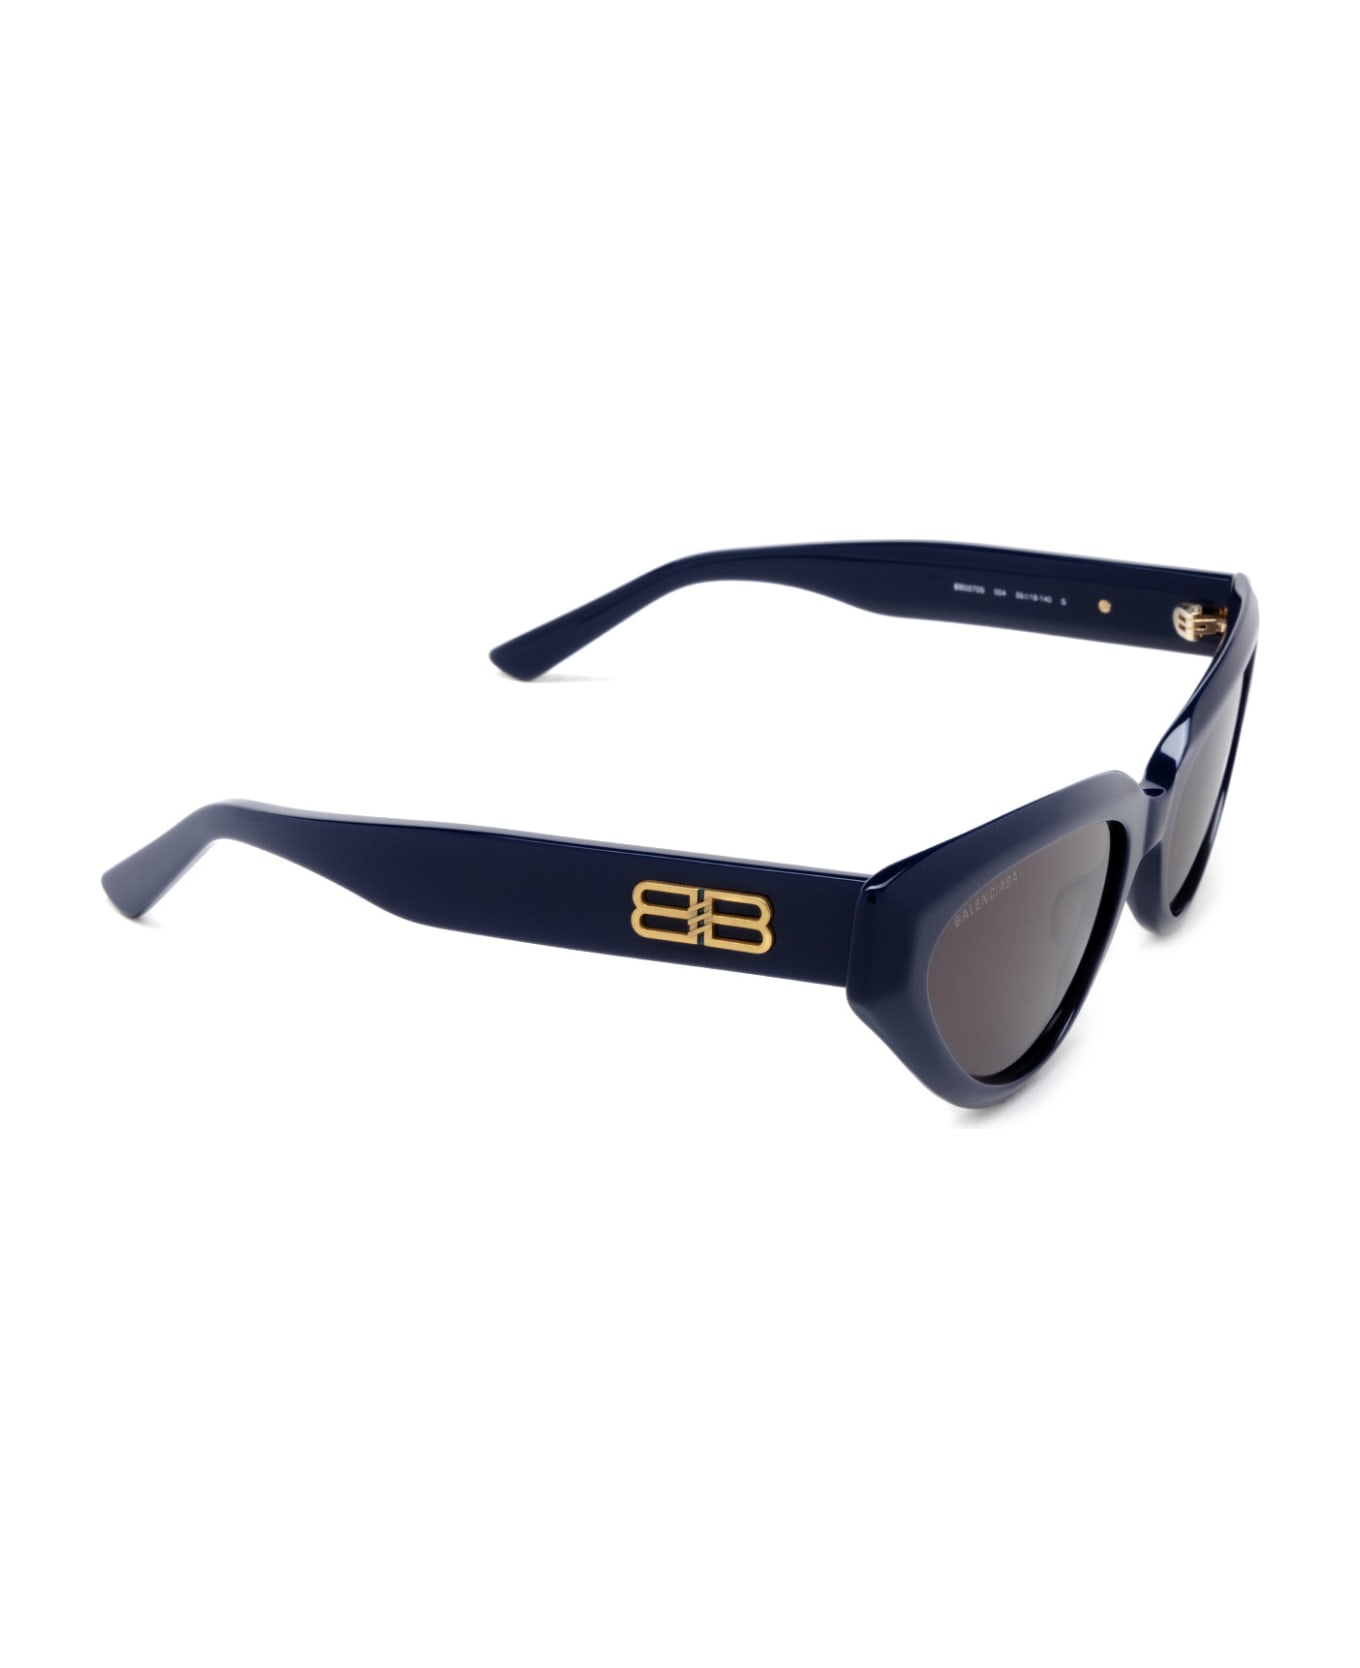 Balenciaga Eyewear Bb0270s Sunglasses - Blue